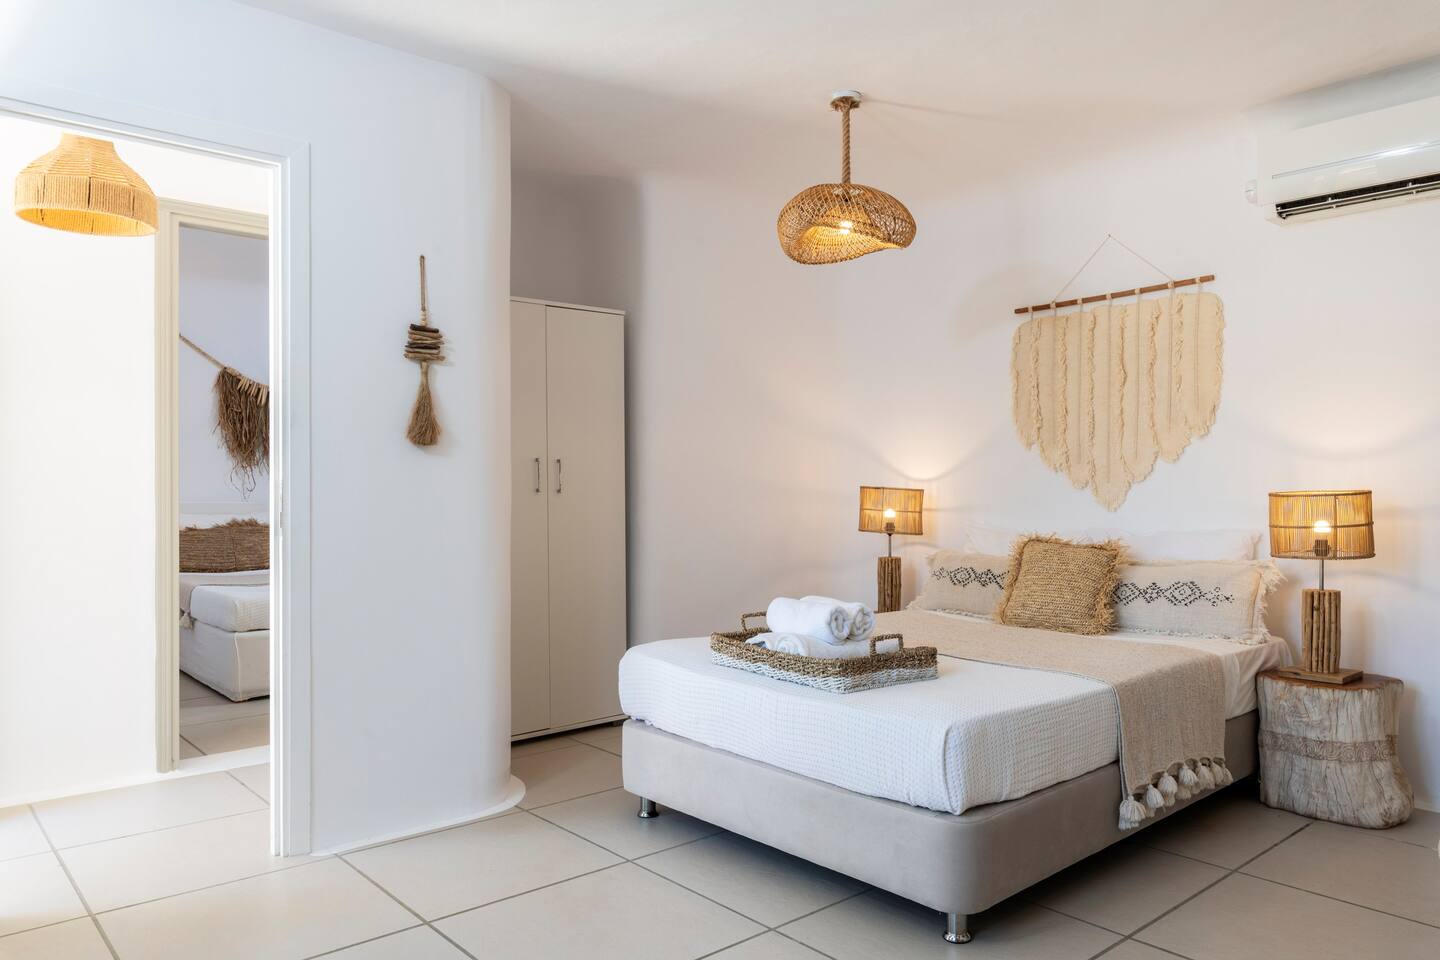 6 bedroom villas mykonos